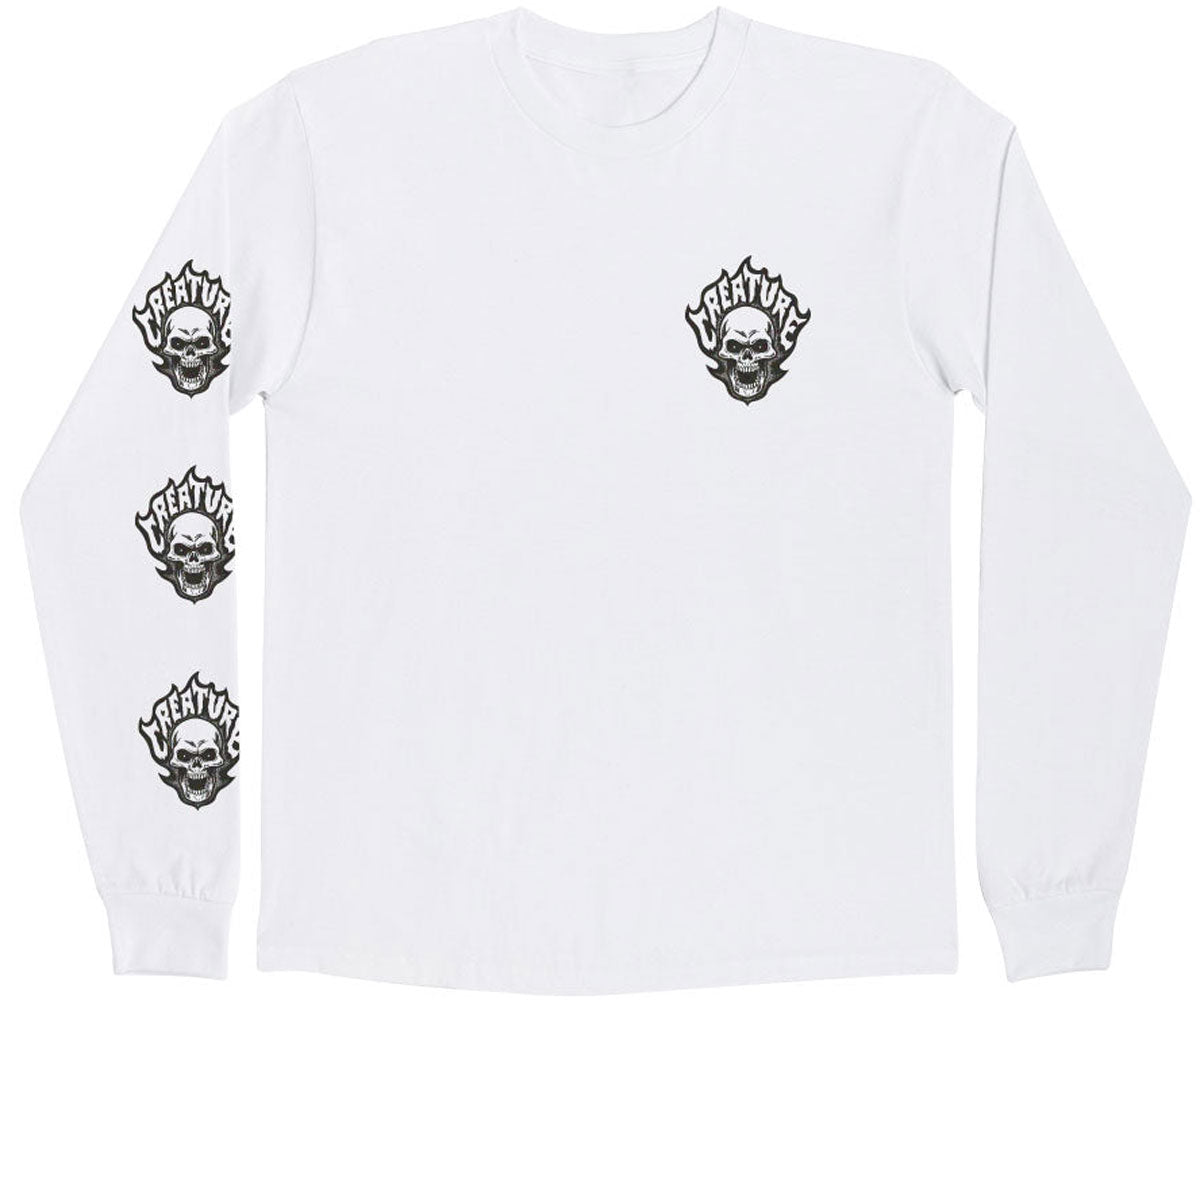 Creature Bonehead Flame Long Sleeve T-Shirt - White image 1